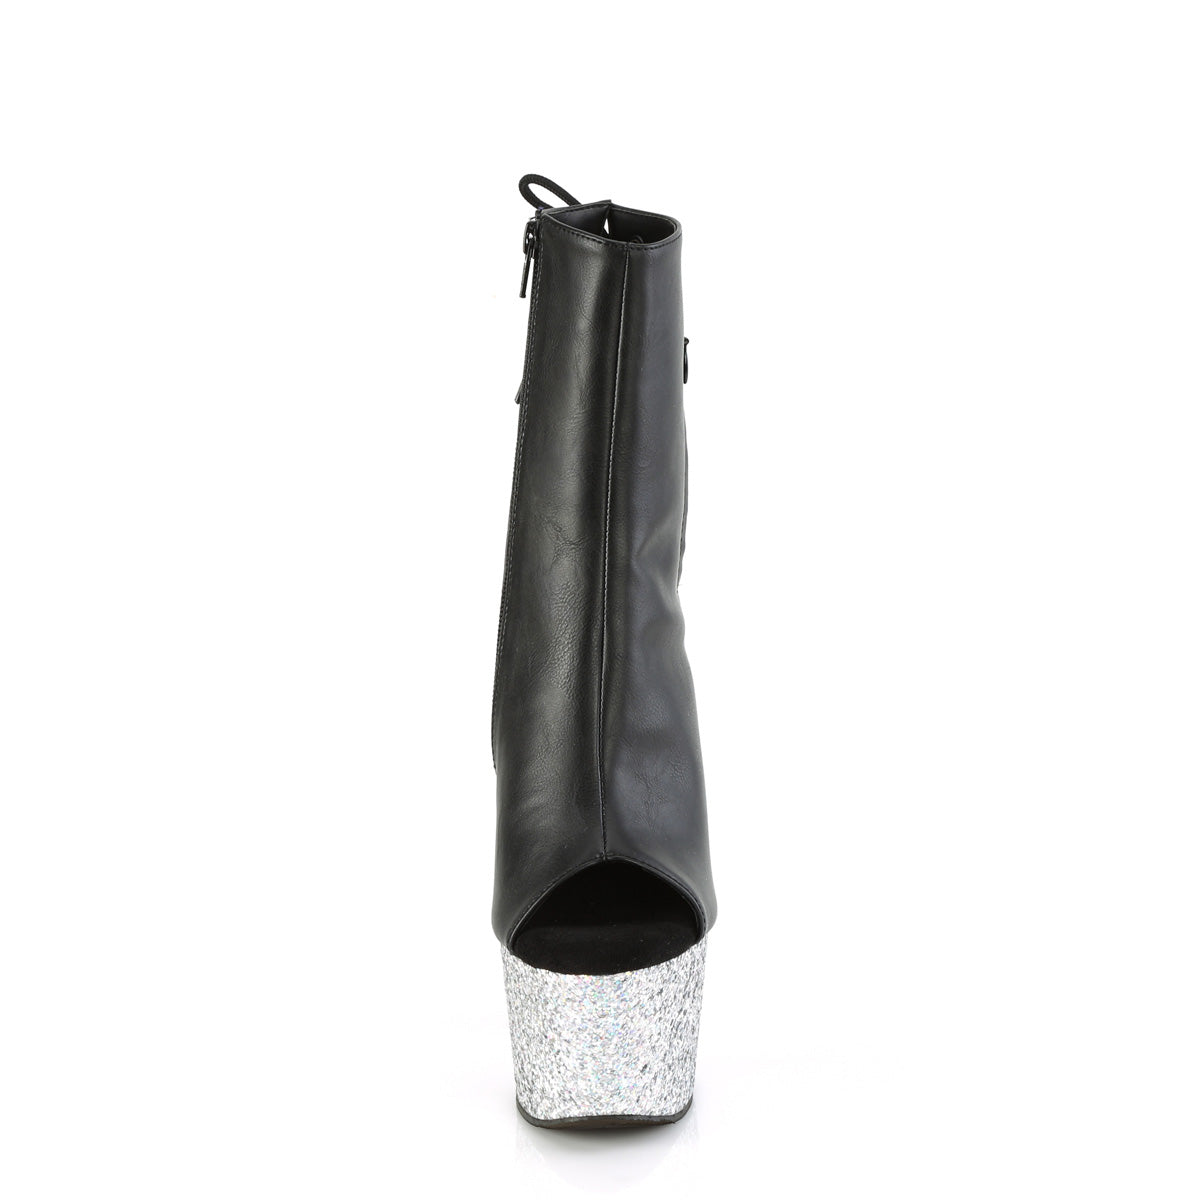 ADORE-1018LG - Black Faux Leather/Silver Multi Glitter Boots